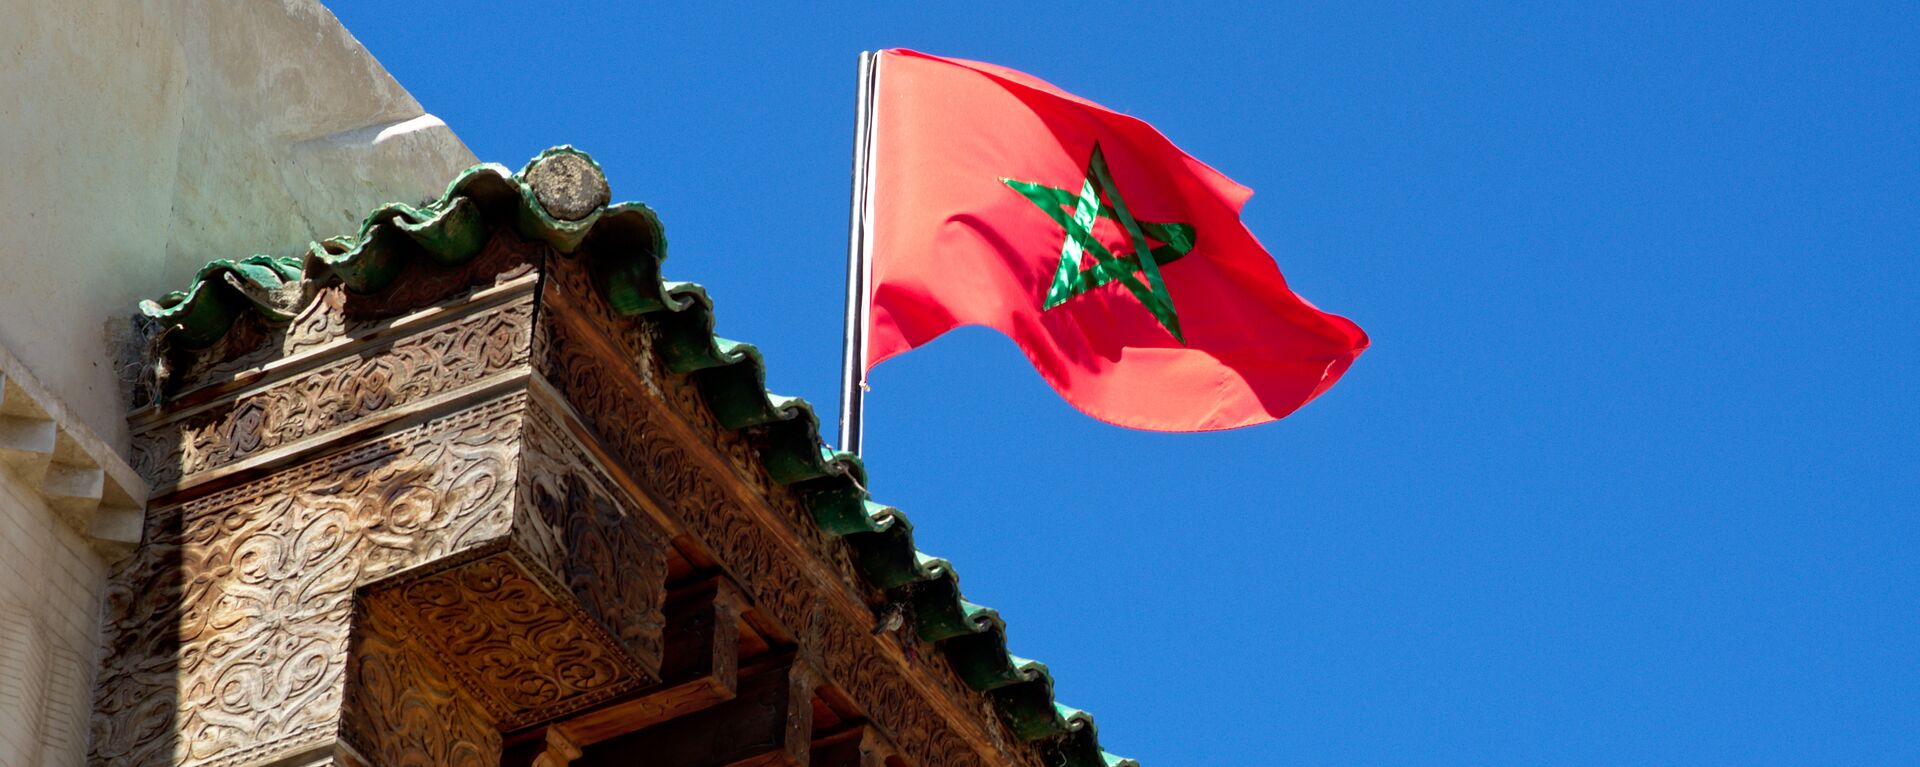 La bandera de Marruecos - Sputnik Mundo, 1920, 25.04.2021